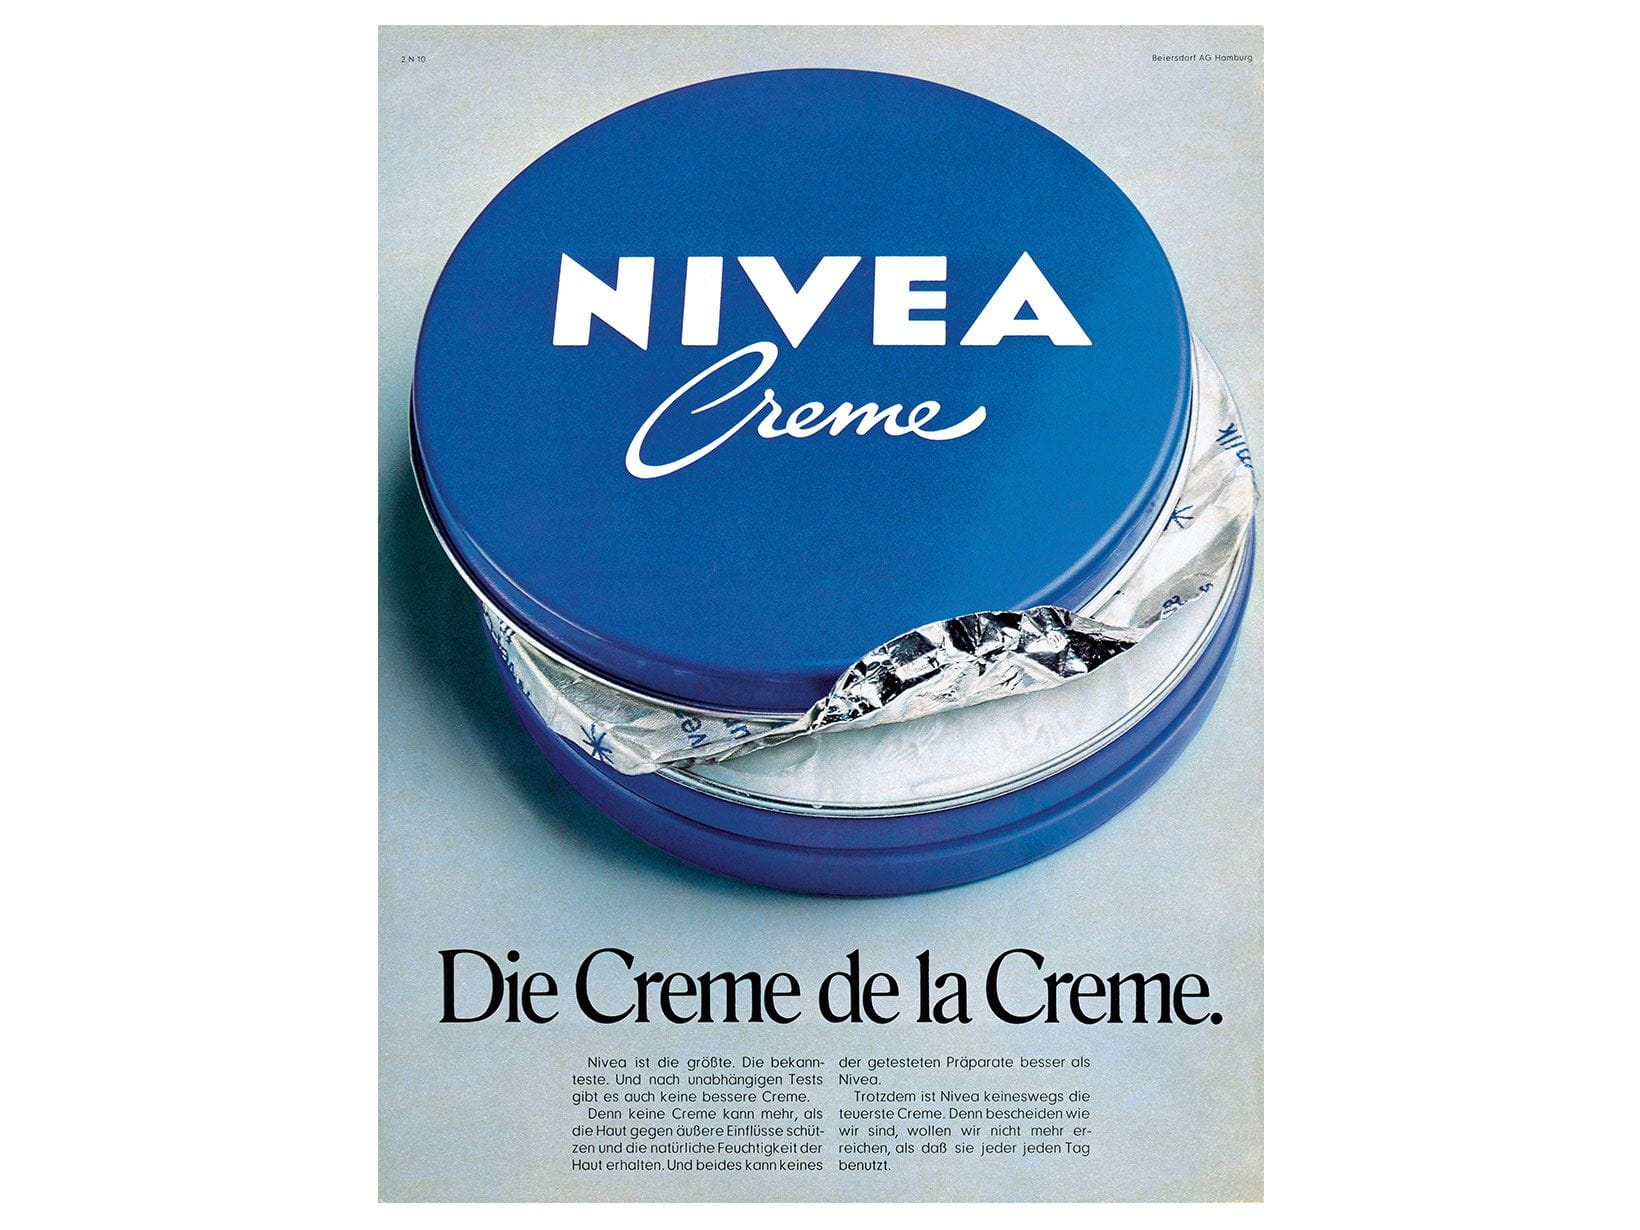 Реклама NIVEA, 1971 г.